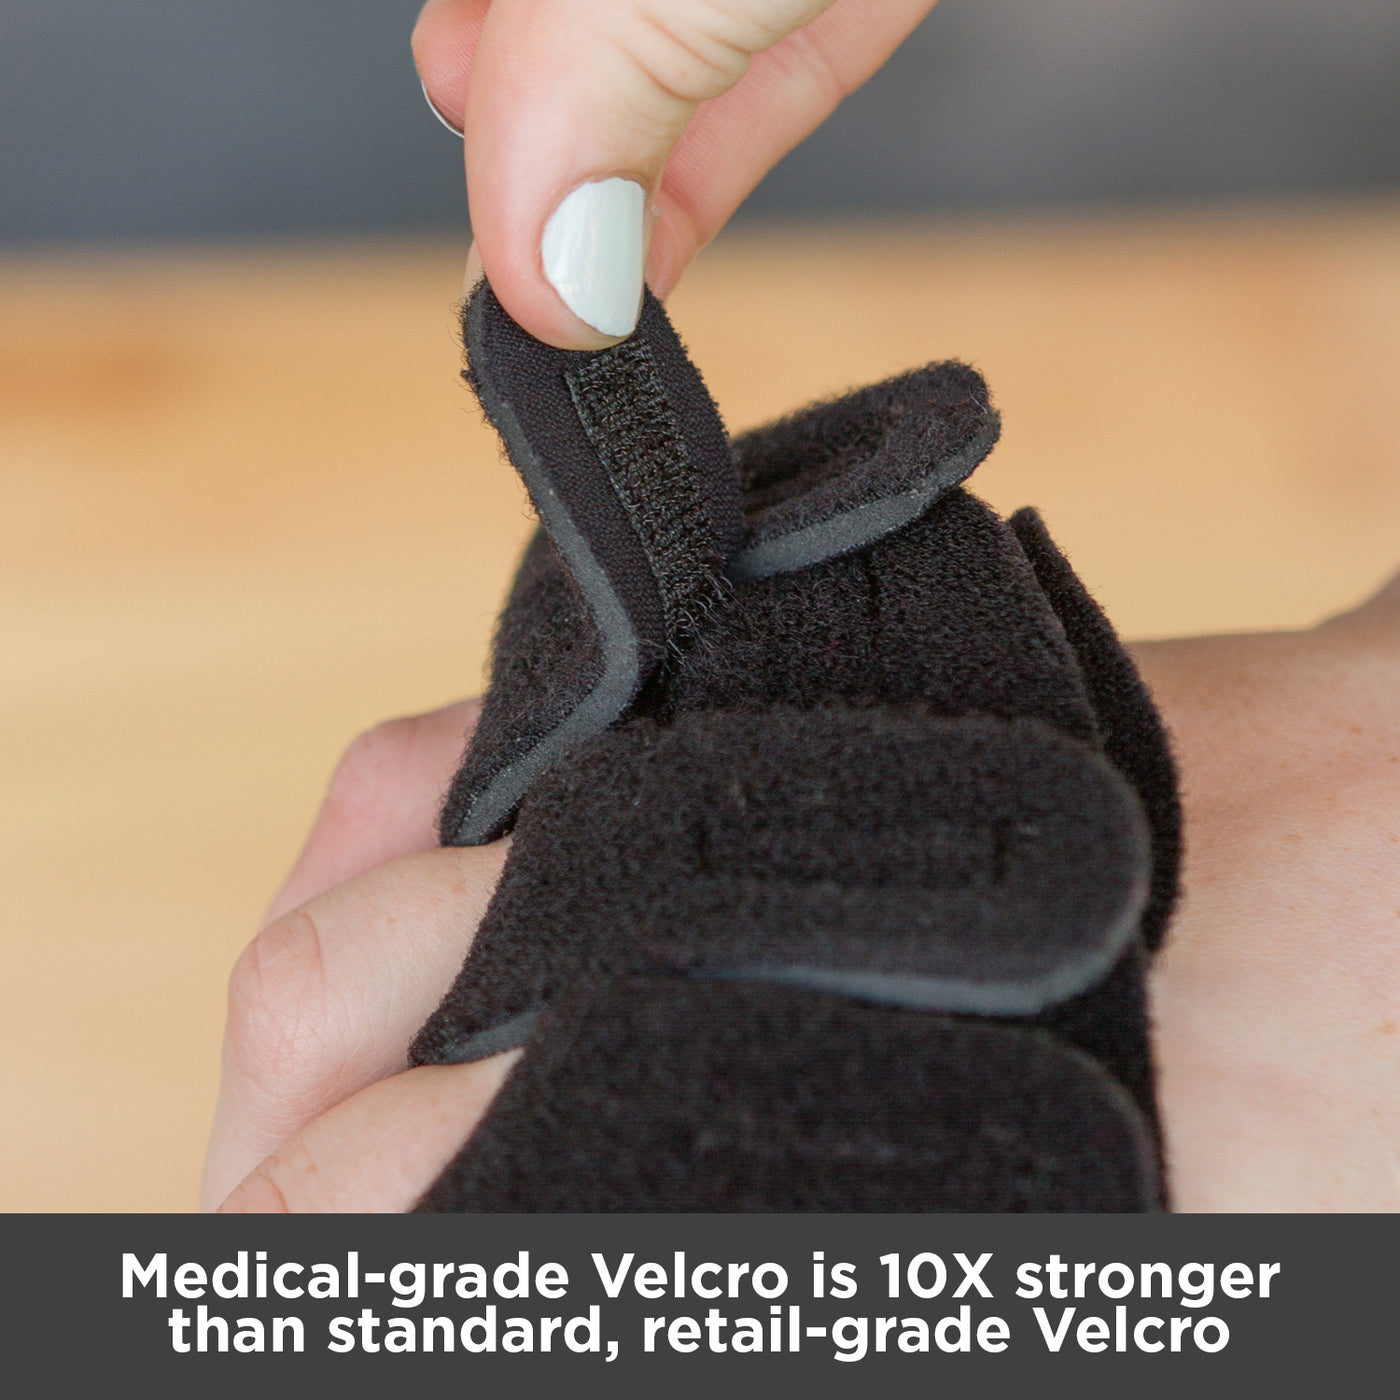 Medical-grade Velcro is 10 times stronger than standard, retail-grade Velcro